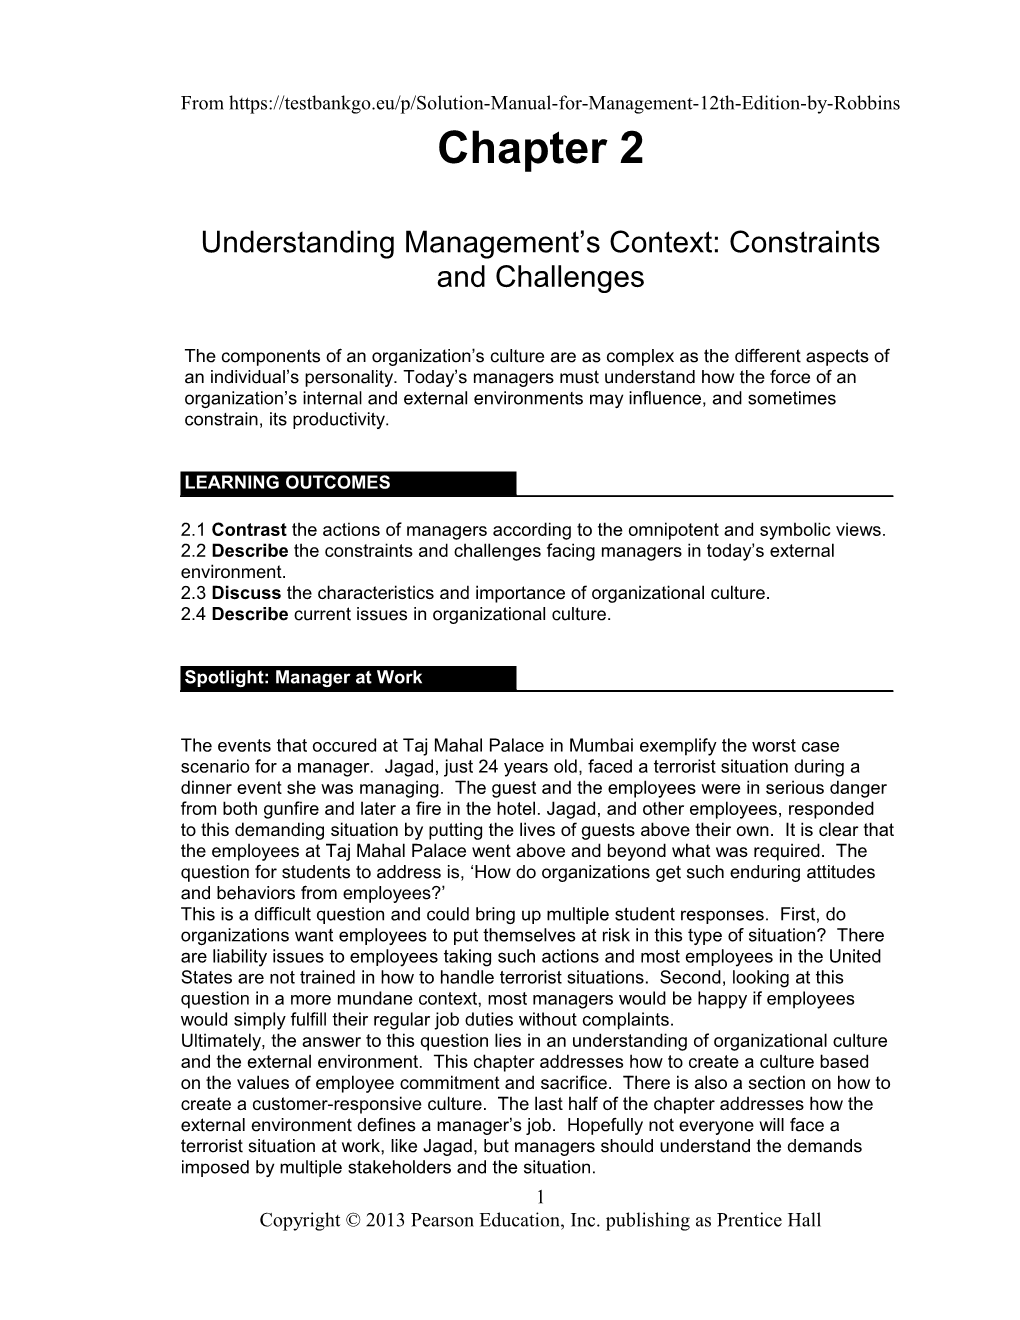 Understanding Management S Context: Constraints and Challenges